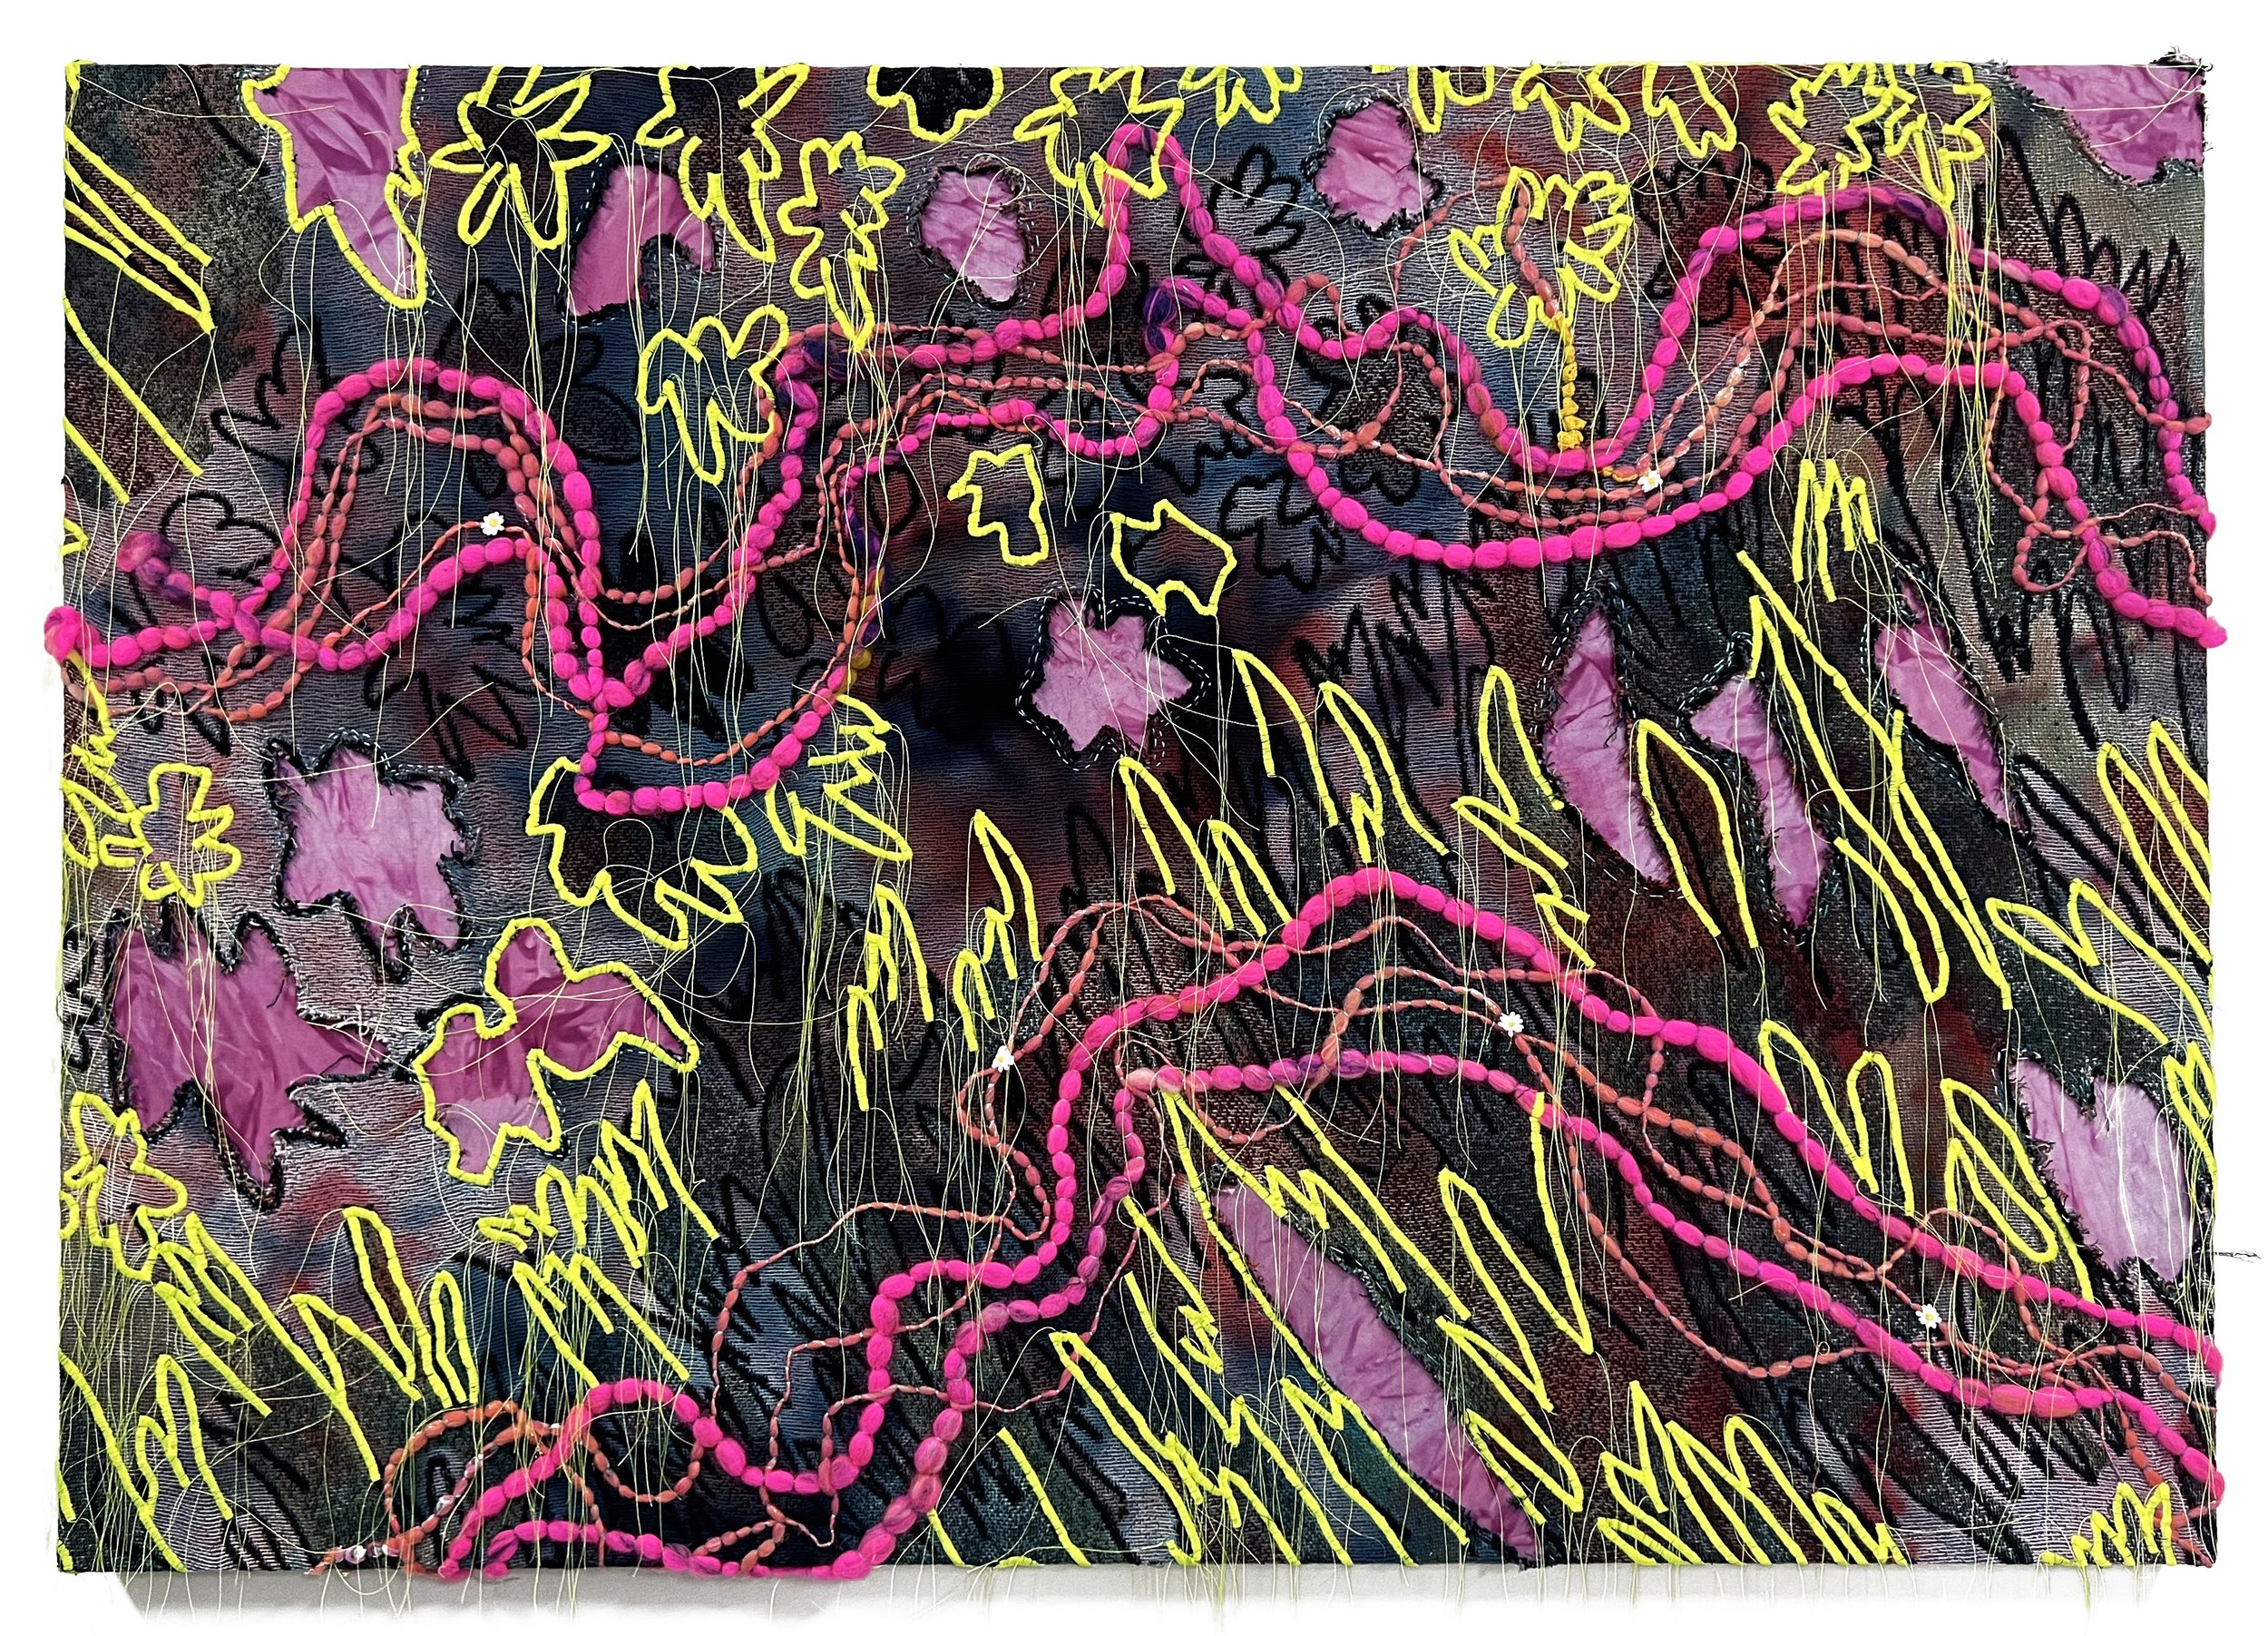 Melissa Leandro | LA LUZ EN EL BOSQUE | 35 x 50 inches / 88.9 x 127 cm, jacquard woven cloth, stitching, dyed fabric, yarn, 2023